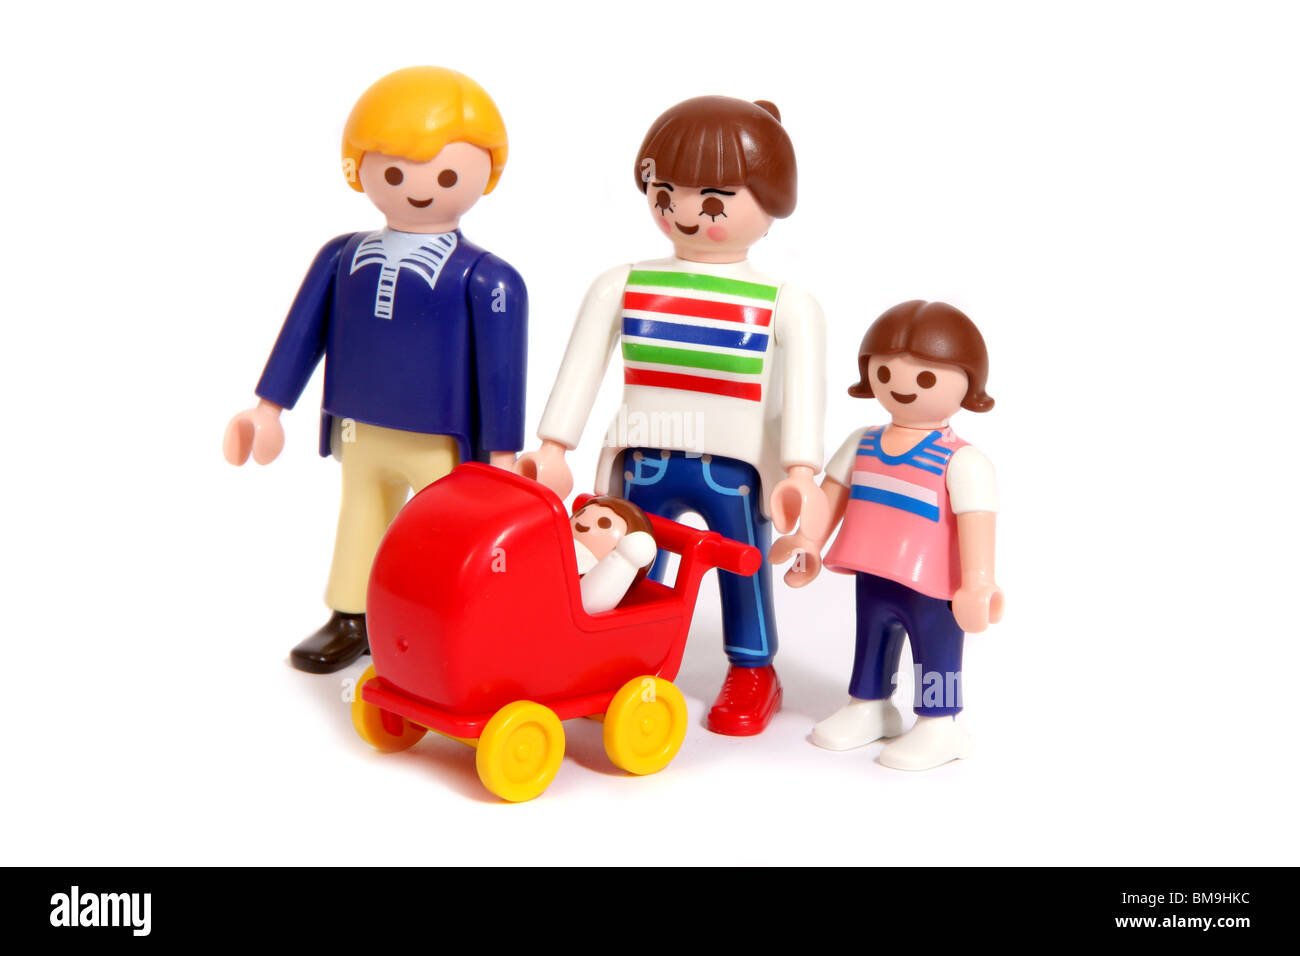 Playmobil family -Fotos und -Bildmaterial in hoher Auflösung – Alamy